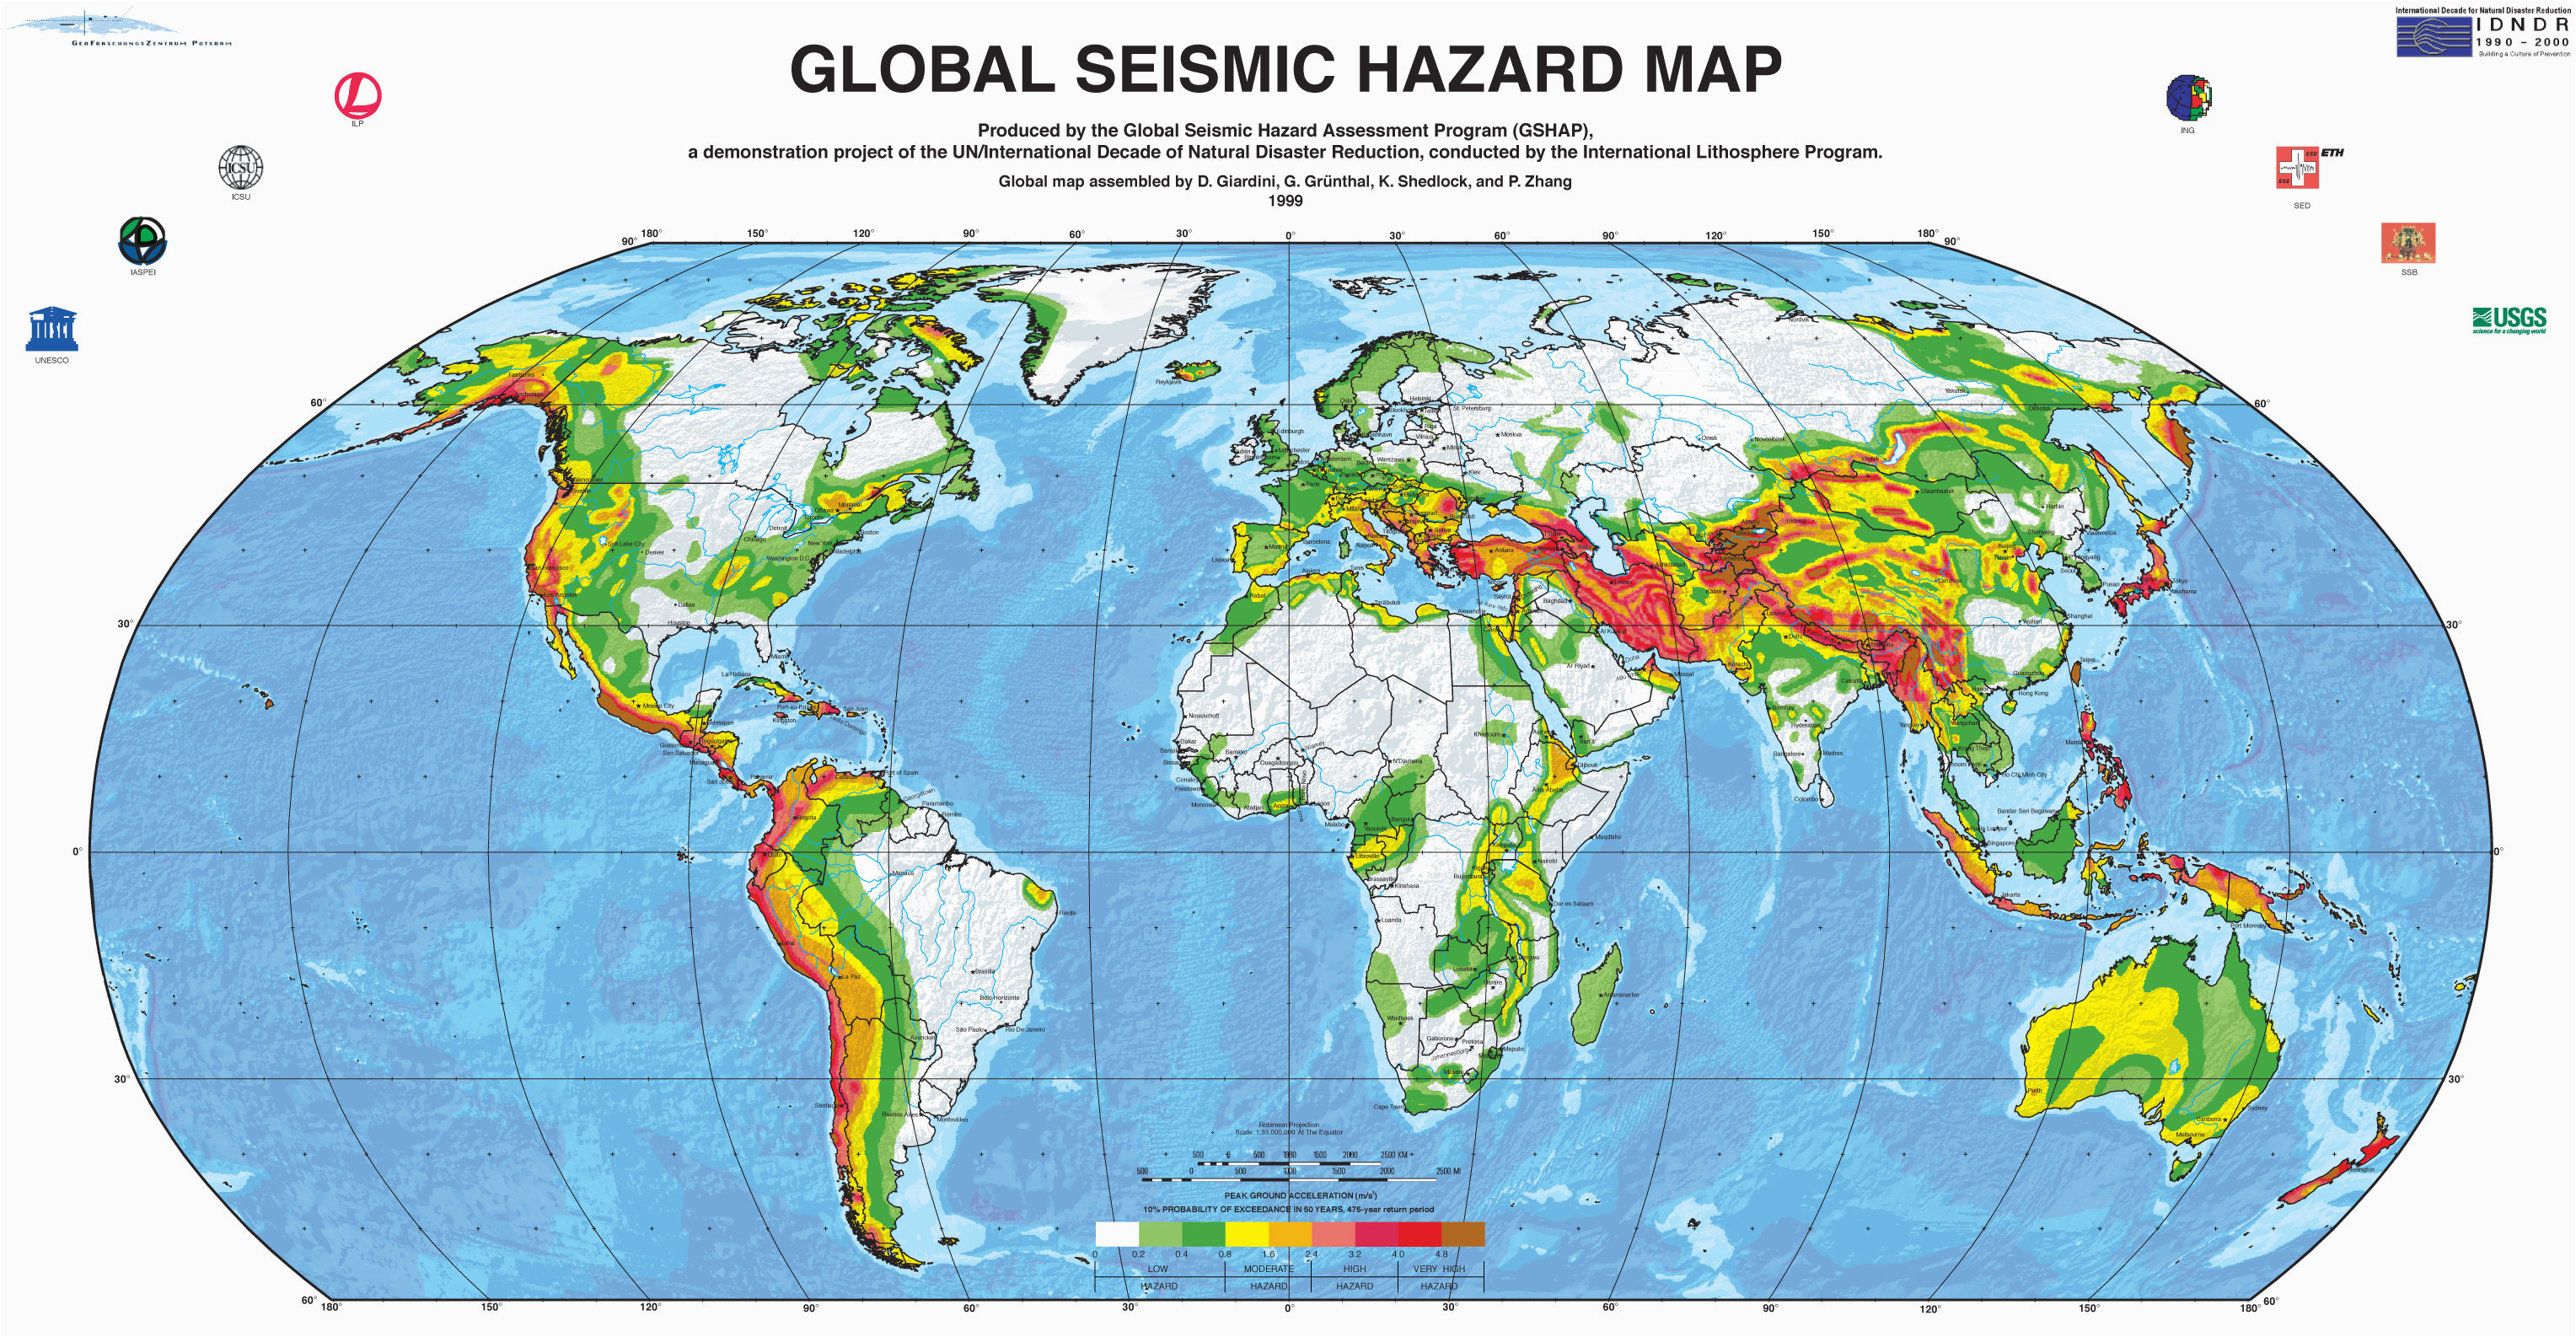 California Earthquake Hazard Map Live Earthquake Map California Fresh Us Earthquake Hazard Map With Of California Earthquake Hazard Map 